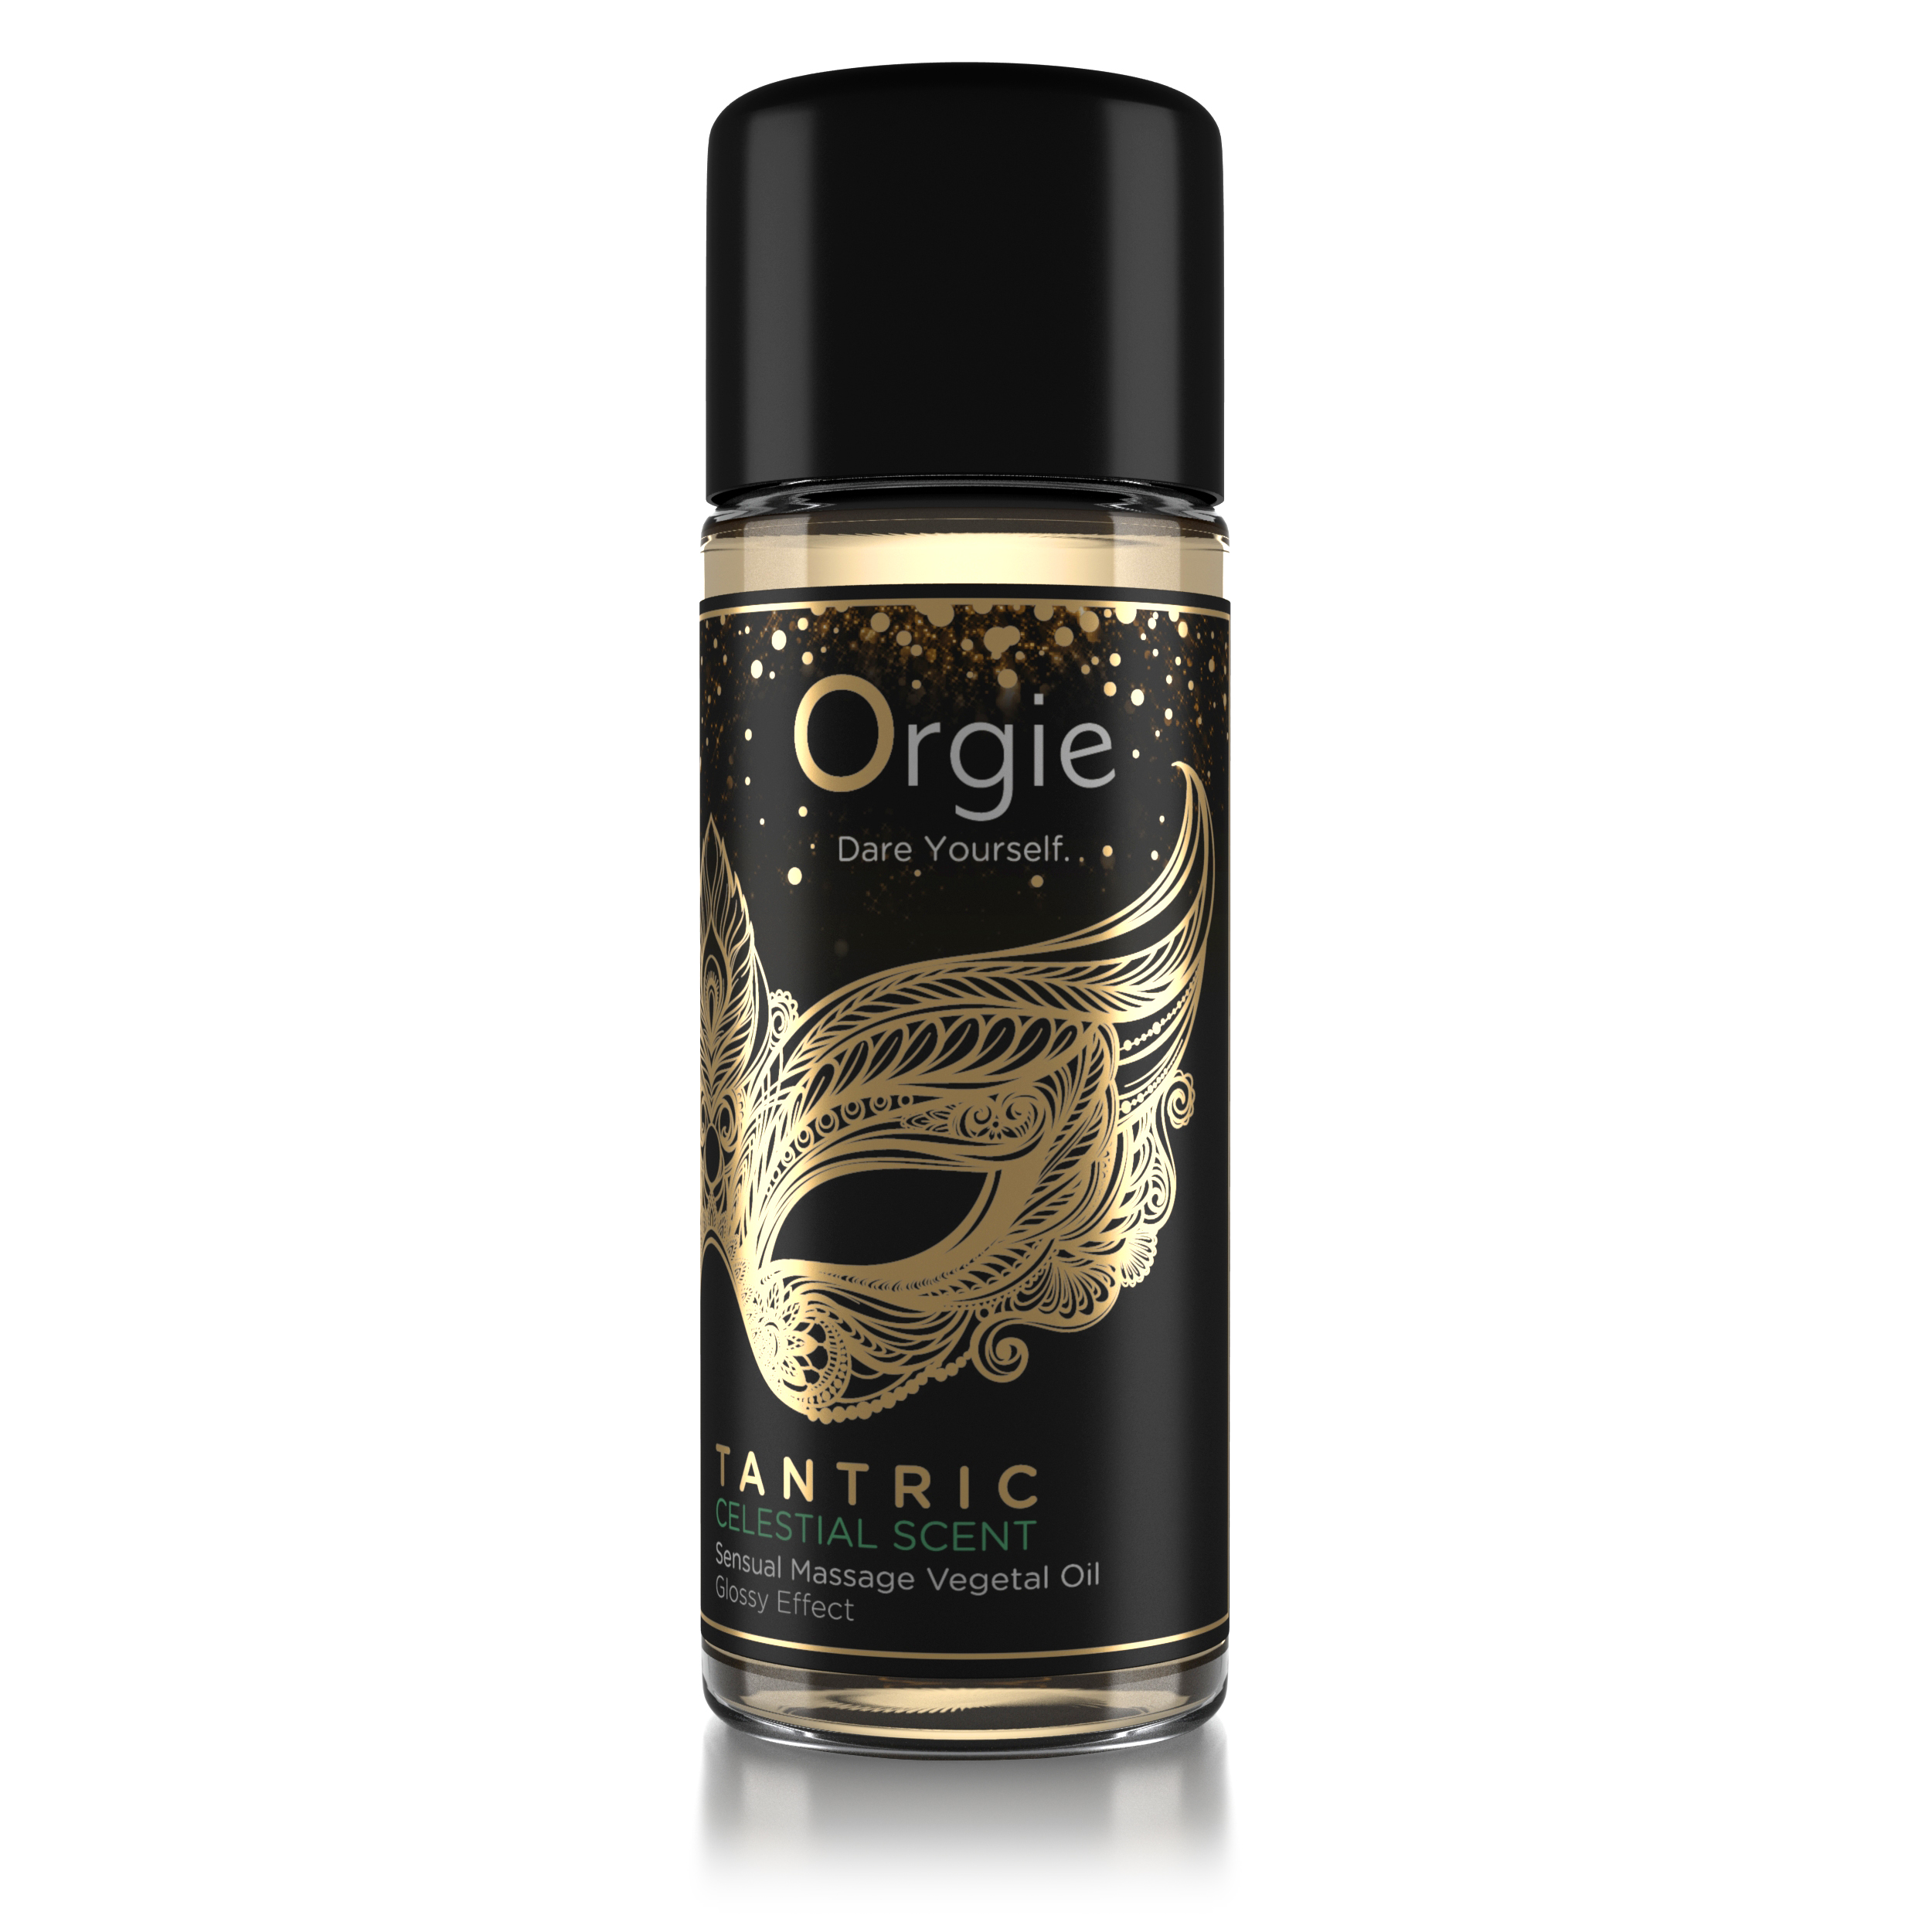 Orgie - Tantric Kit  - Sensual Massage Oil - 3 x 30ml